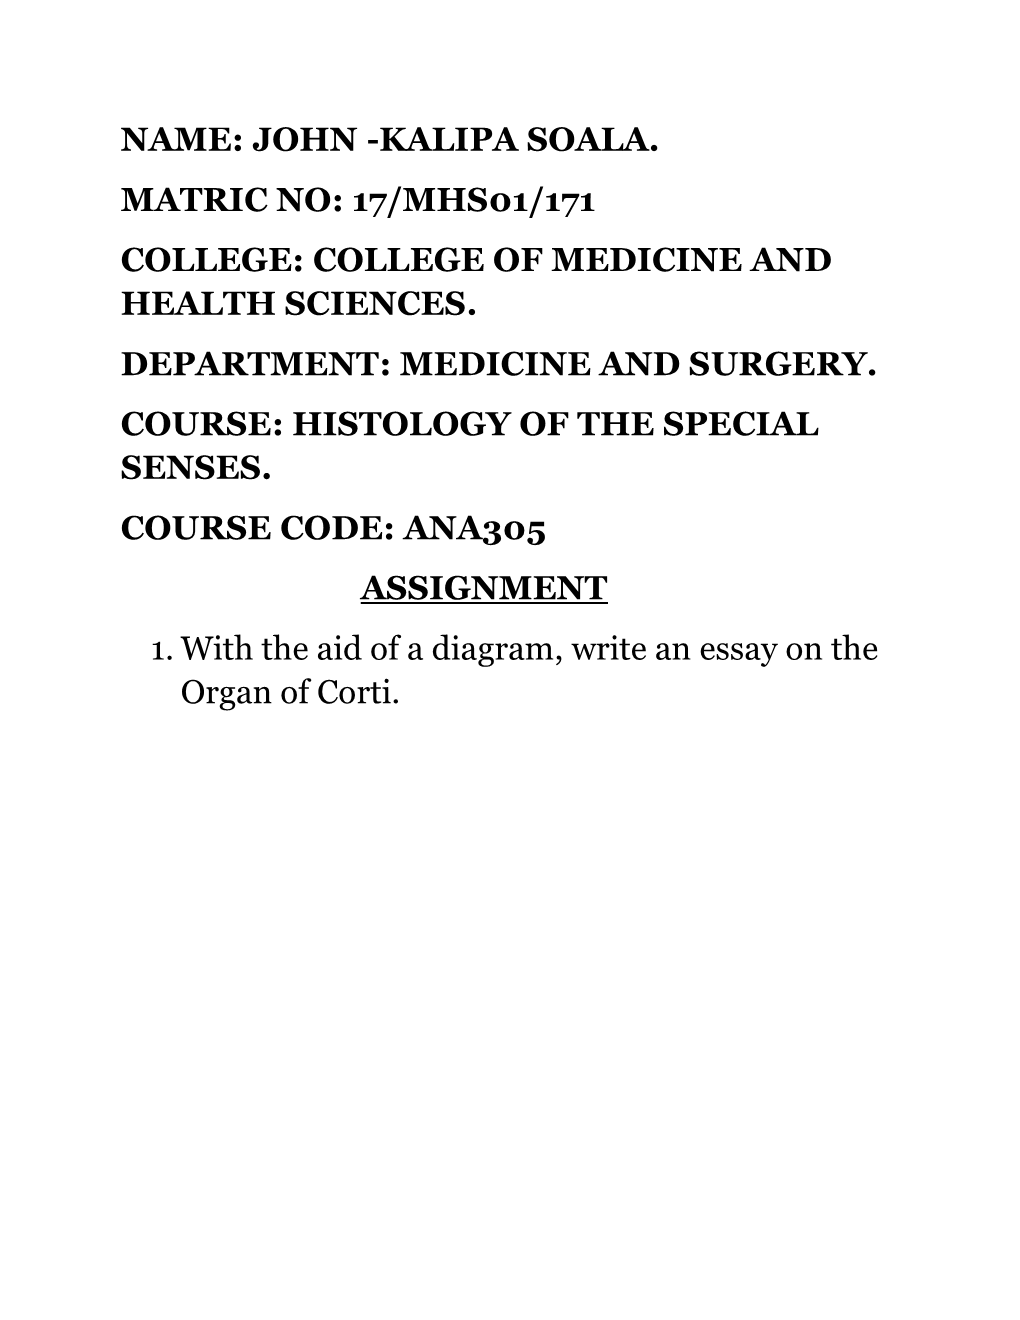 Name: John -Kalipa Soala. Matric No: 17/Mhs01/171 College: College of Medicine and Health Sciences